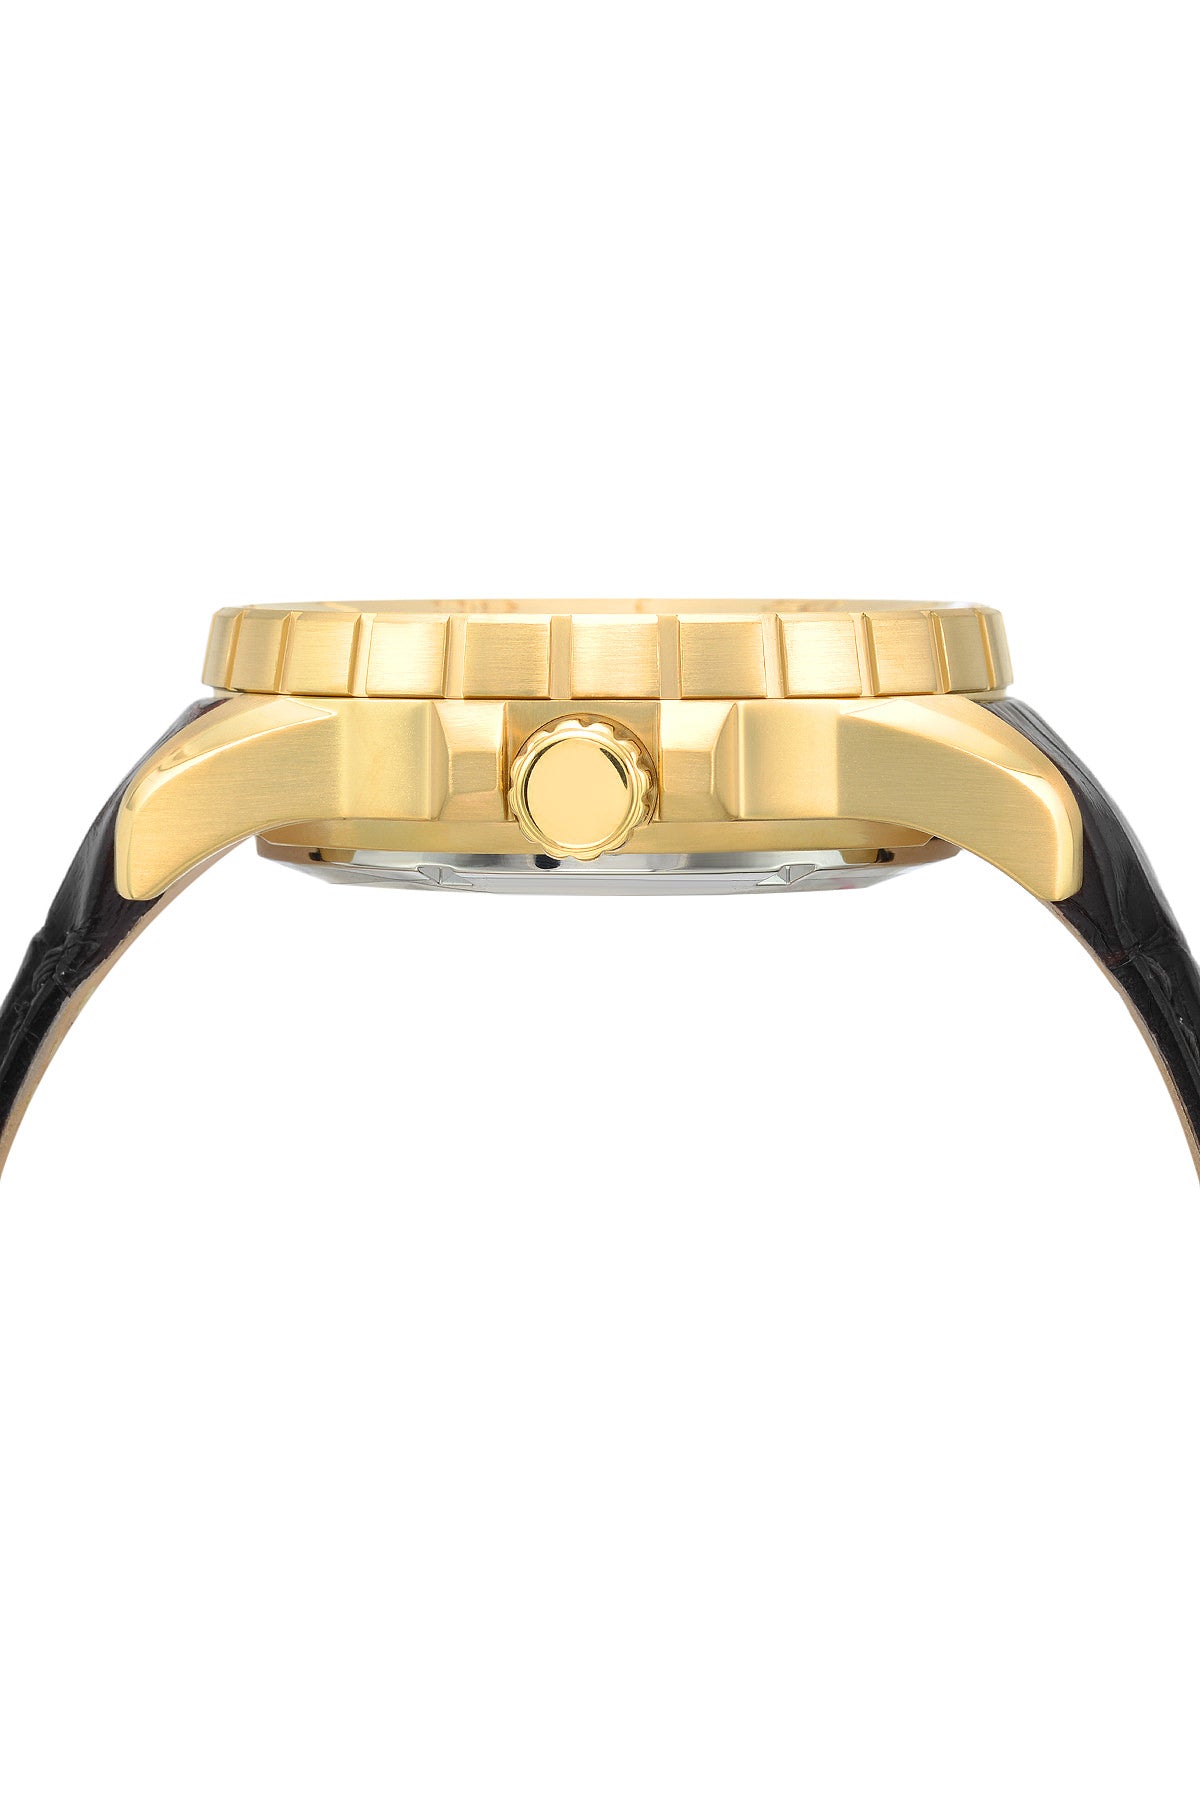 Porsamo Bleu Tommy luxury men's watch, genuine leather band, gold, black 631BTOL